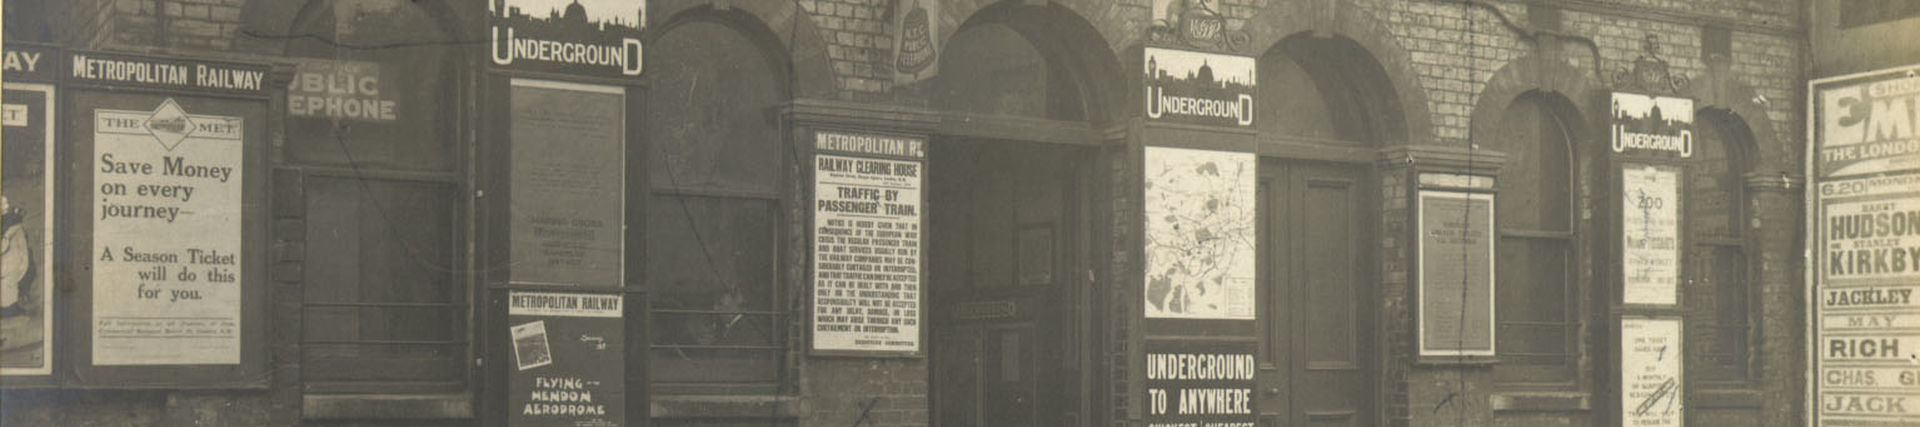 St Mary's Underground station, Metropolitan and District Railway, 1916